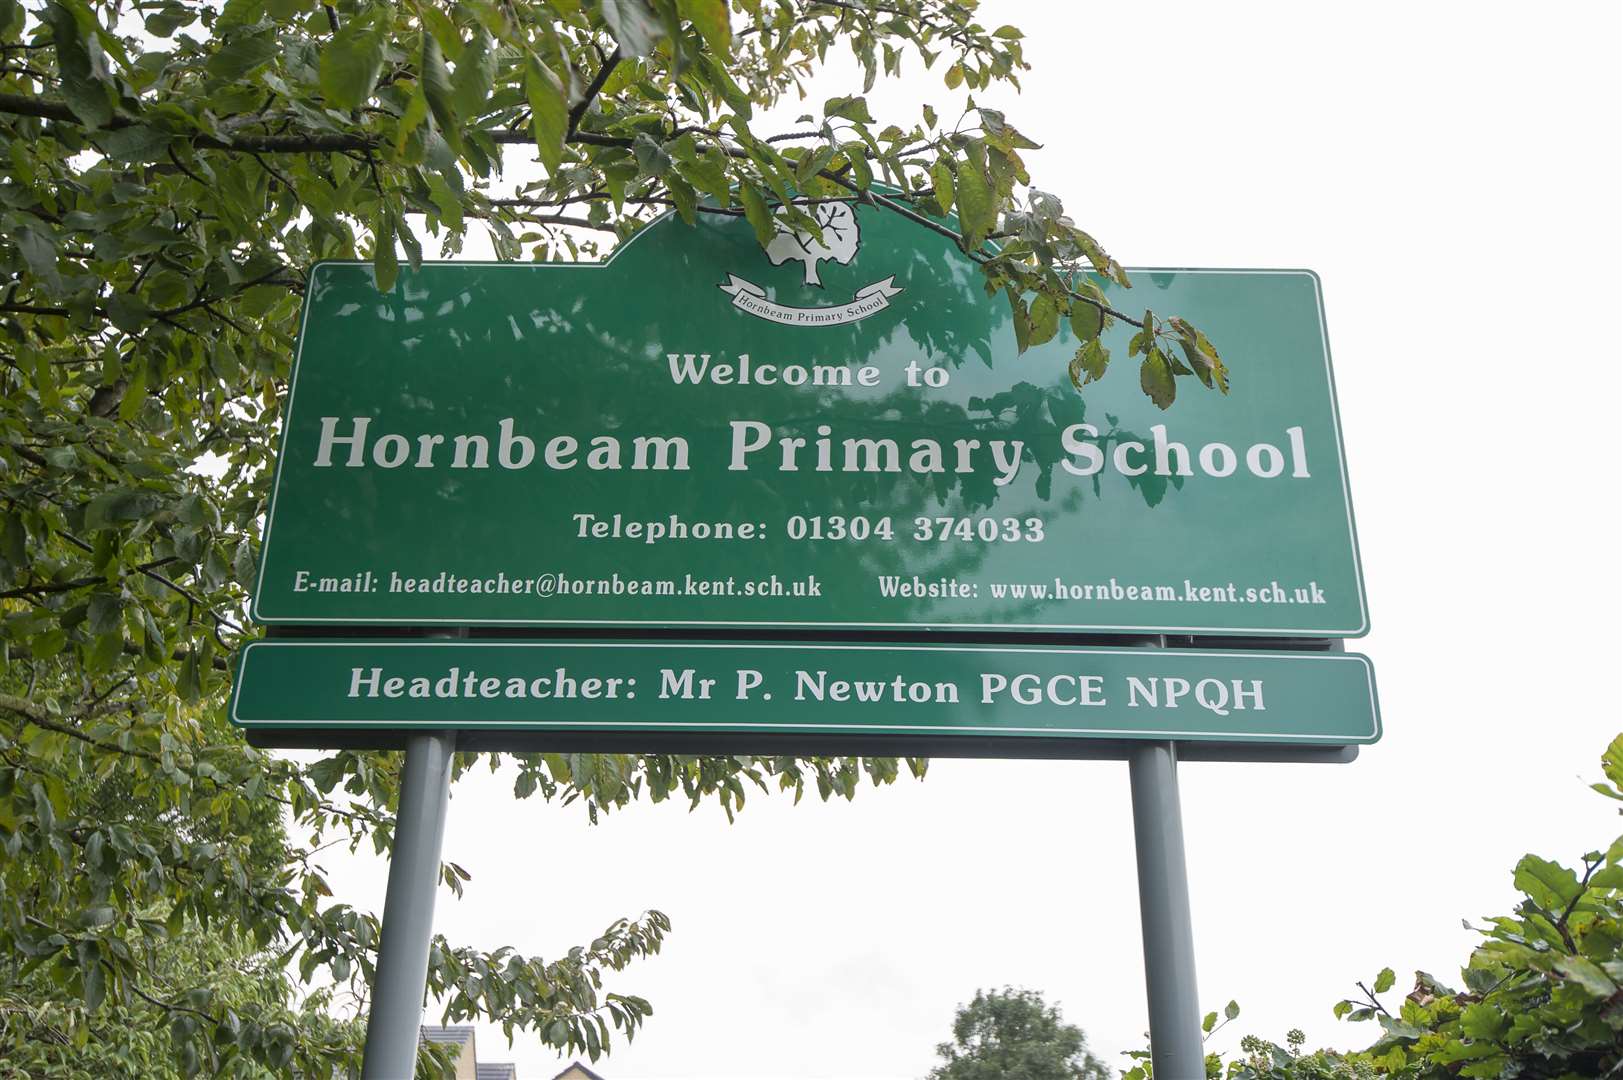 Hornbeam Primary School owns a defibrillator